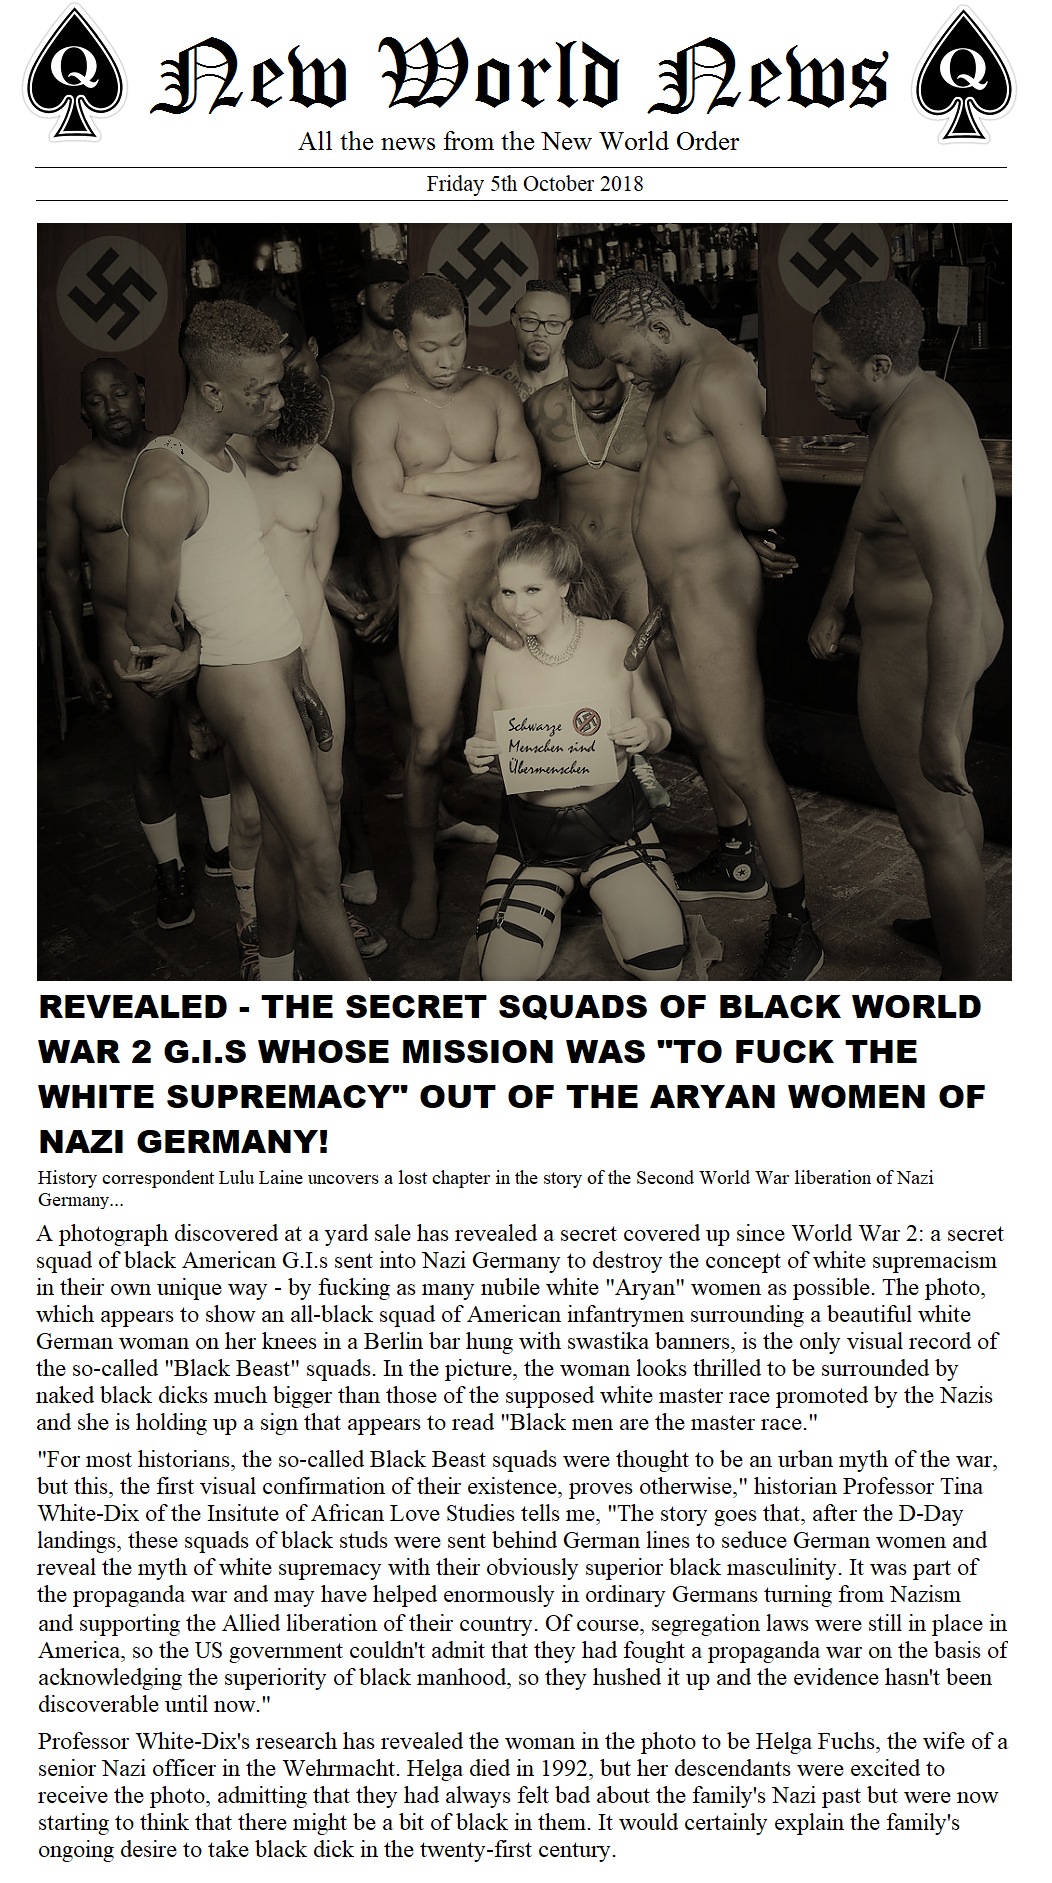 Revealed - The Secret Squads of Black World War 2... - Tumbex